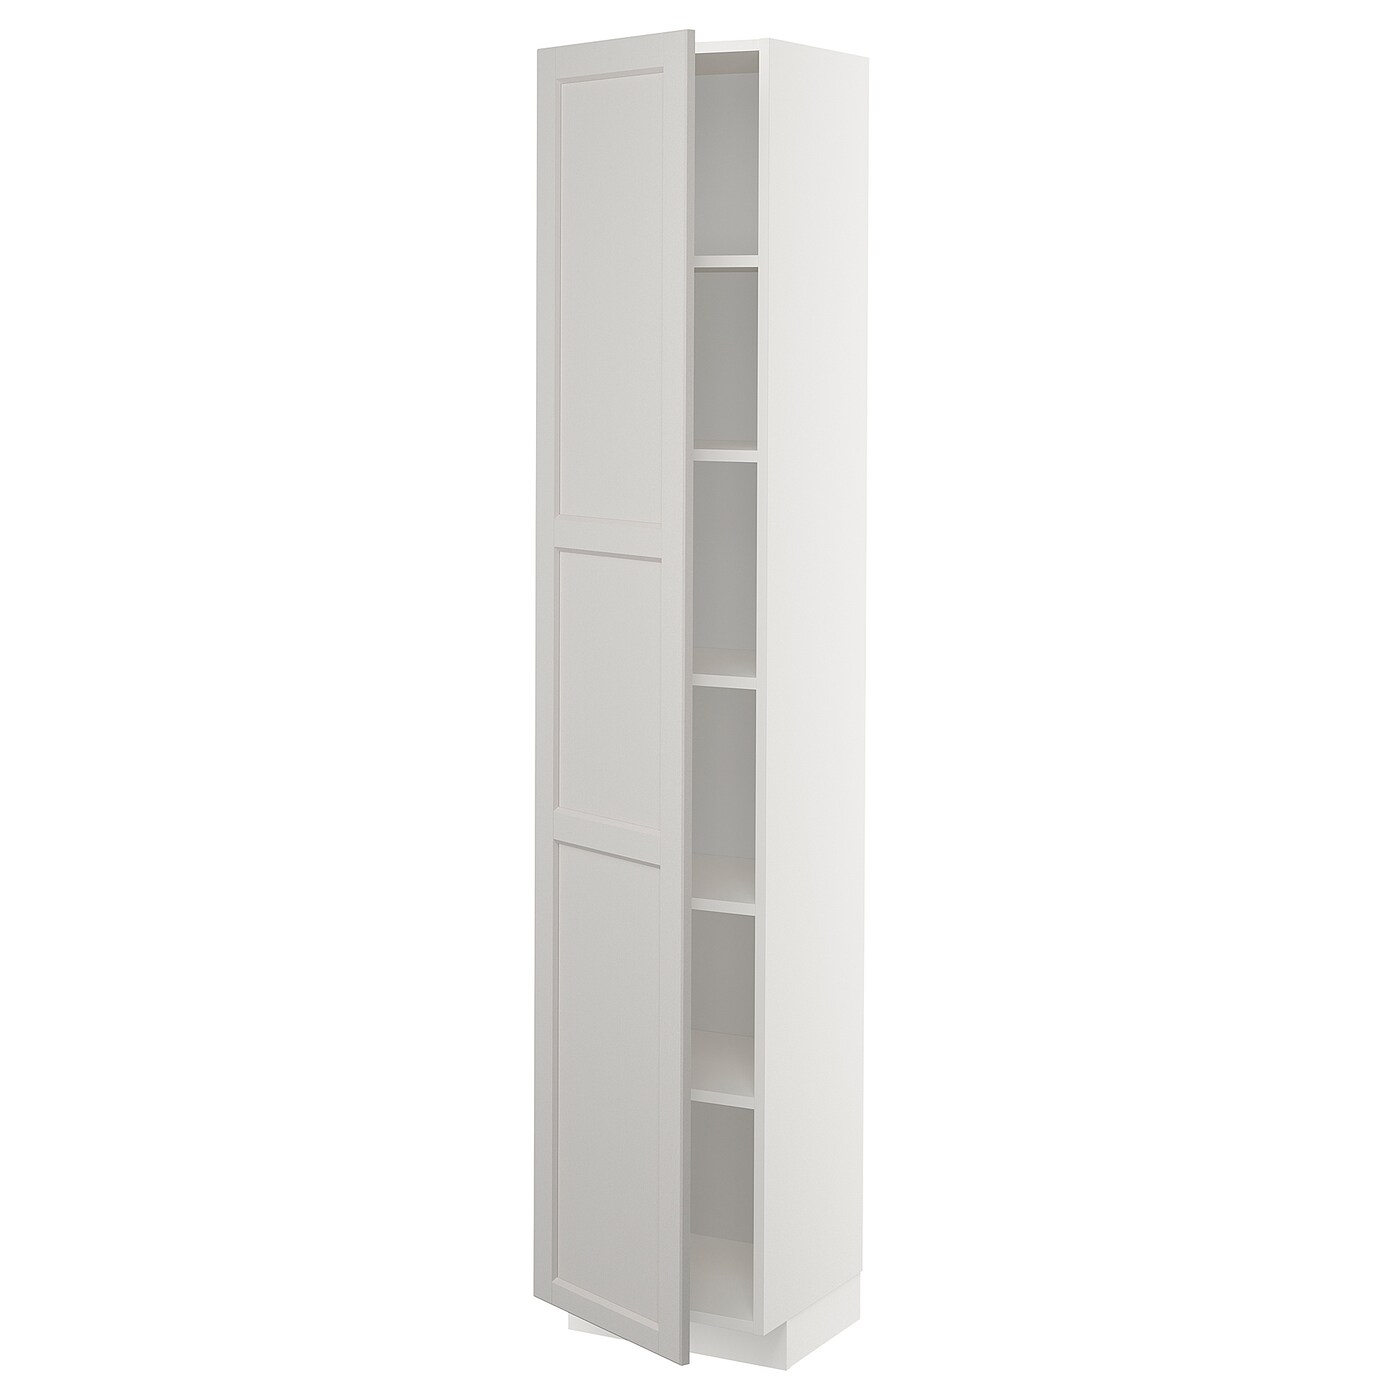 Высокий кухонный шкаф с полками - IKEA METOD/МЕТОД ИКЕА, 200х37х40 см, белый/серый